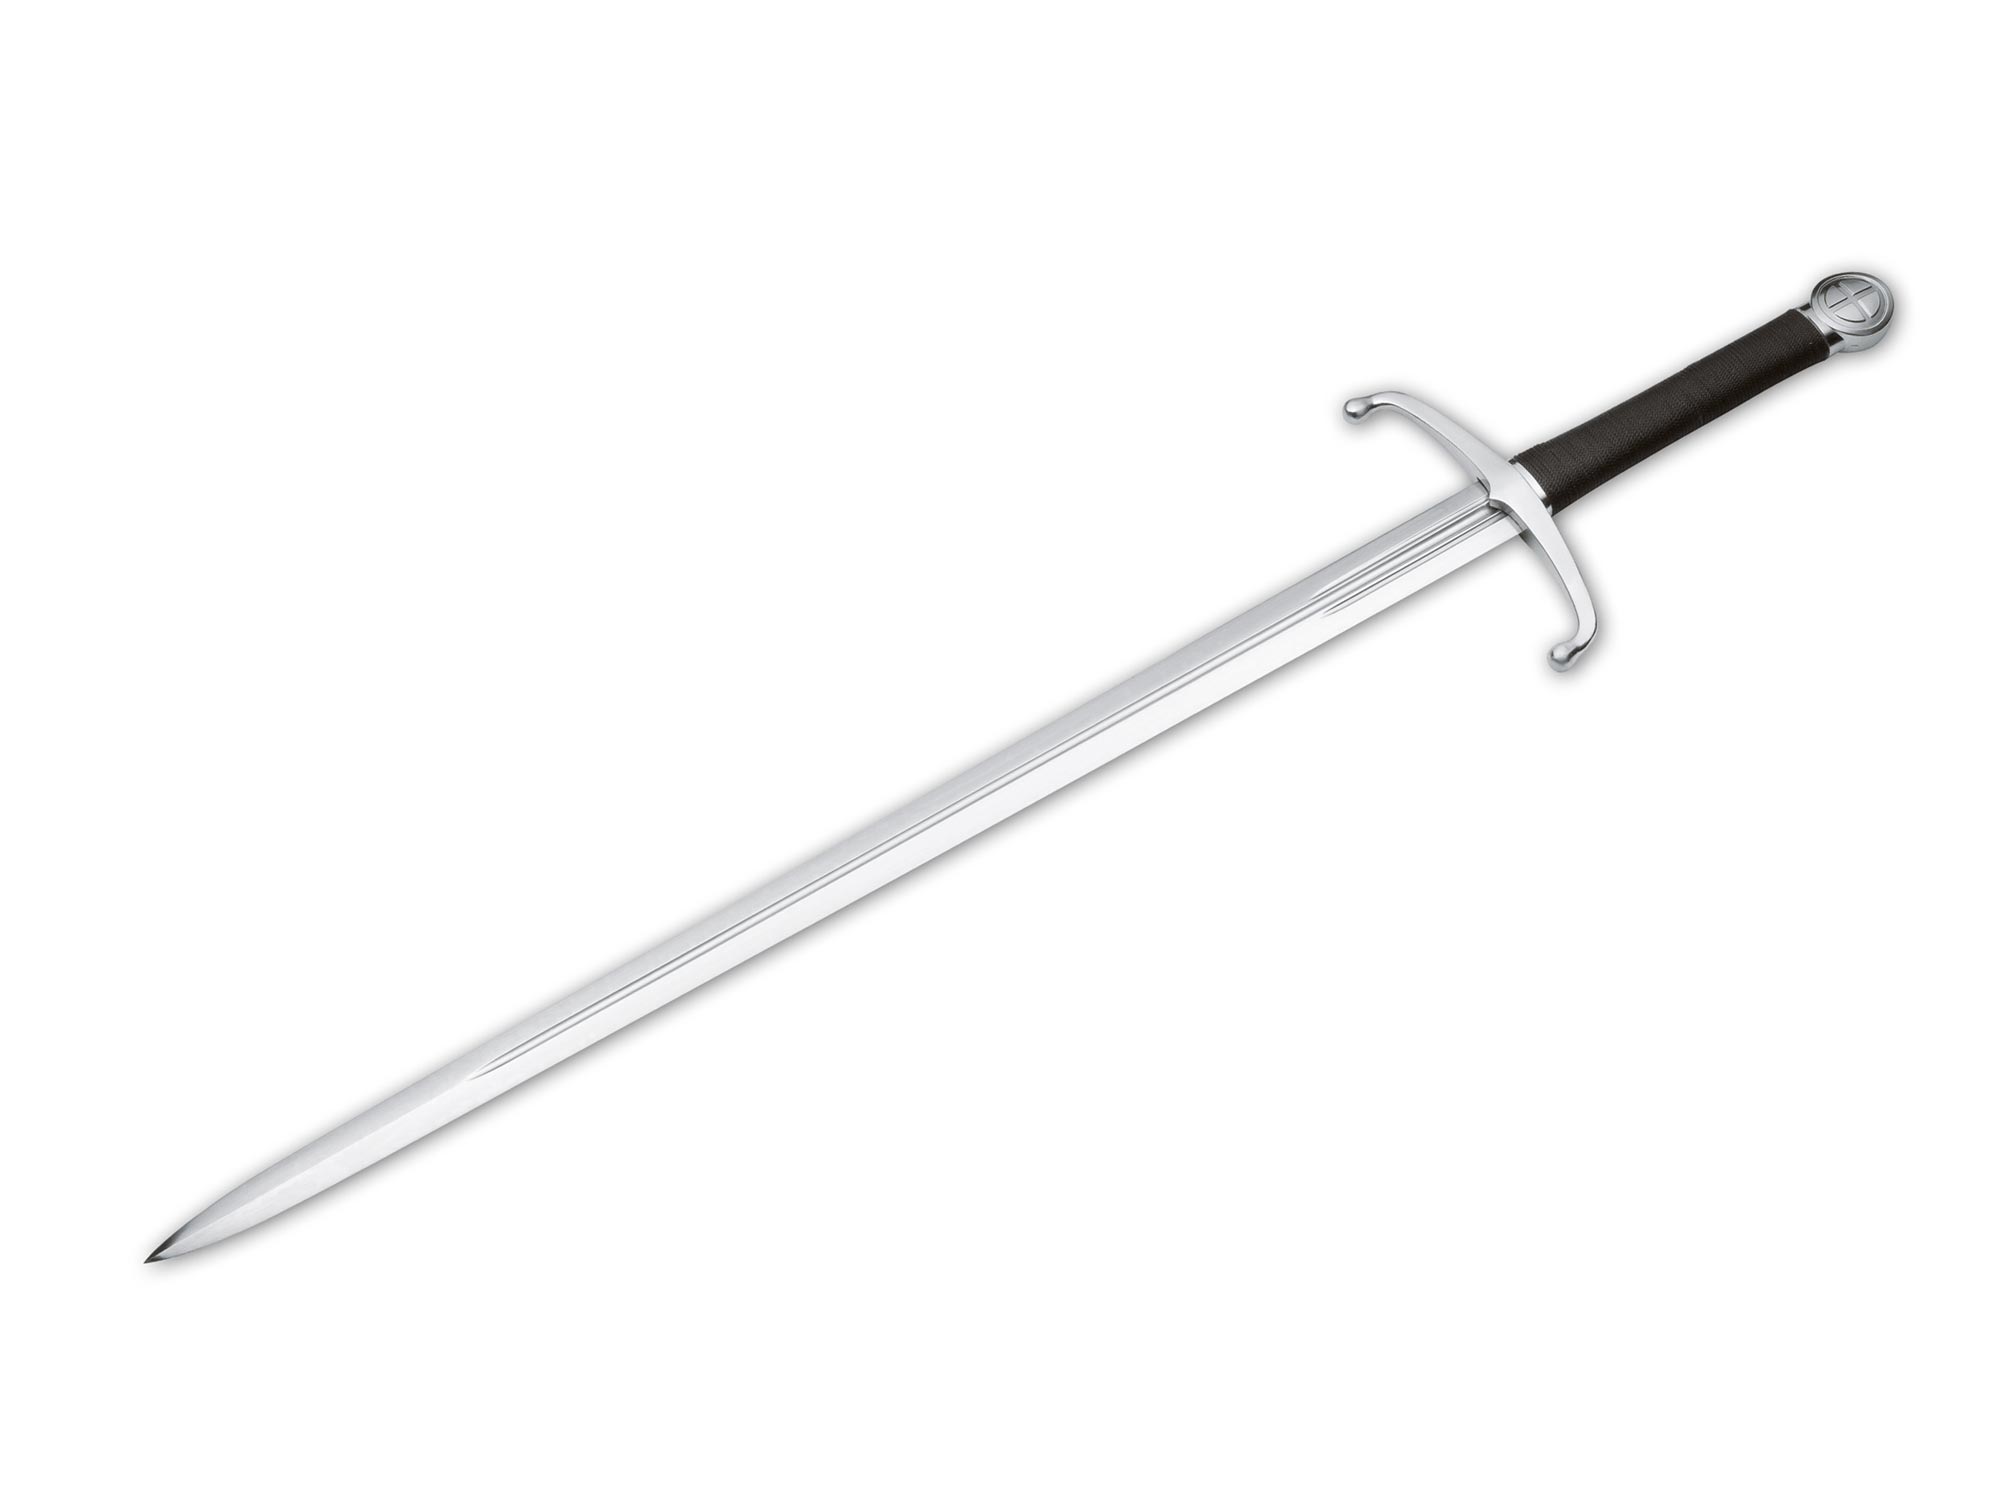 Magnum The Knight's Sword